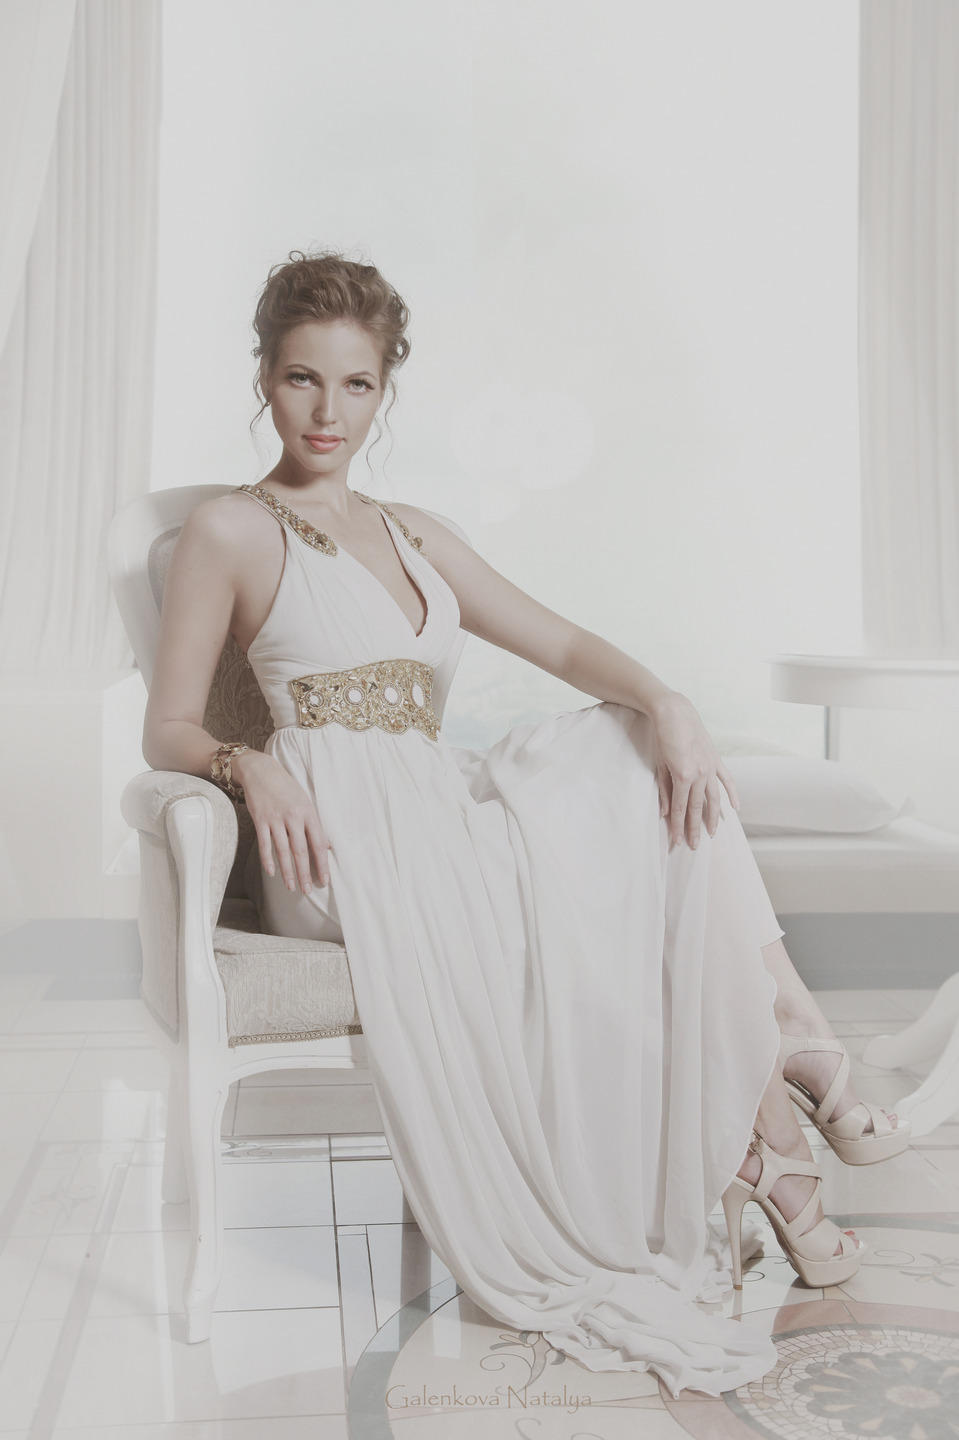 Gilr on throne | girl, white dress, throne, hall